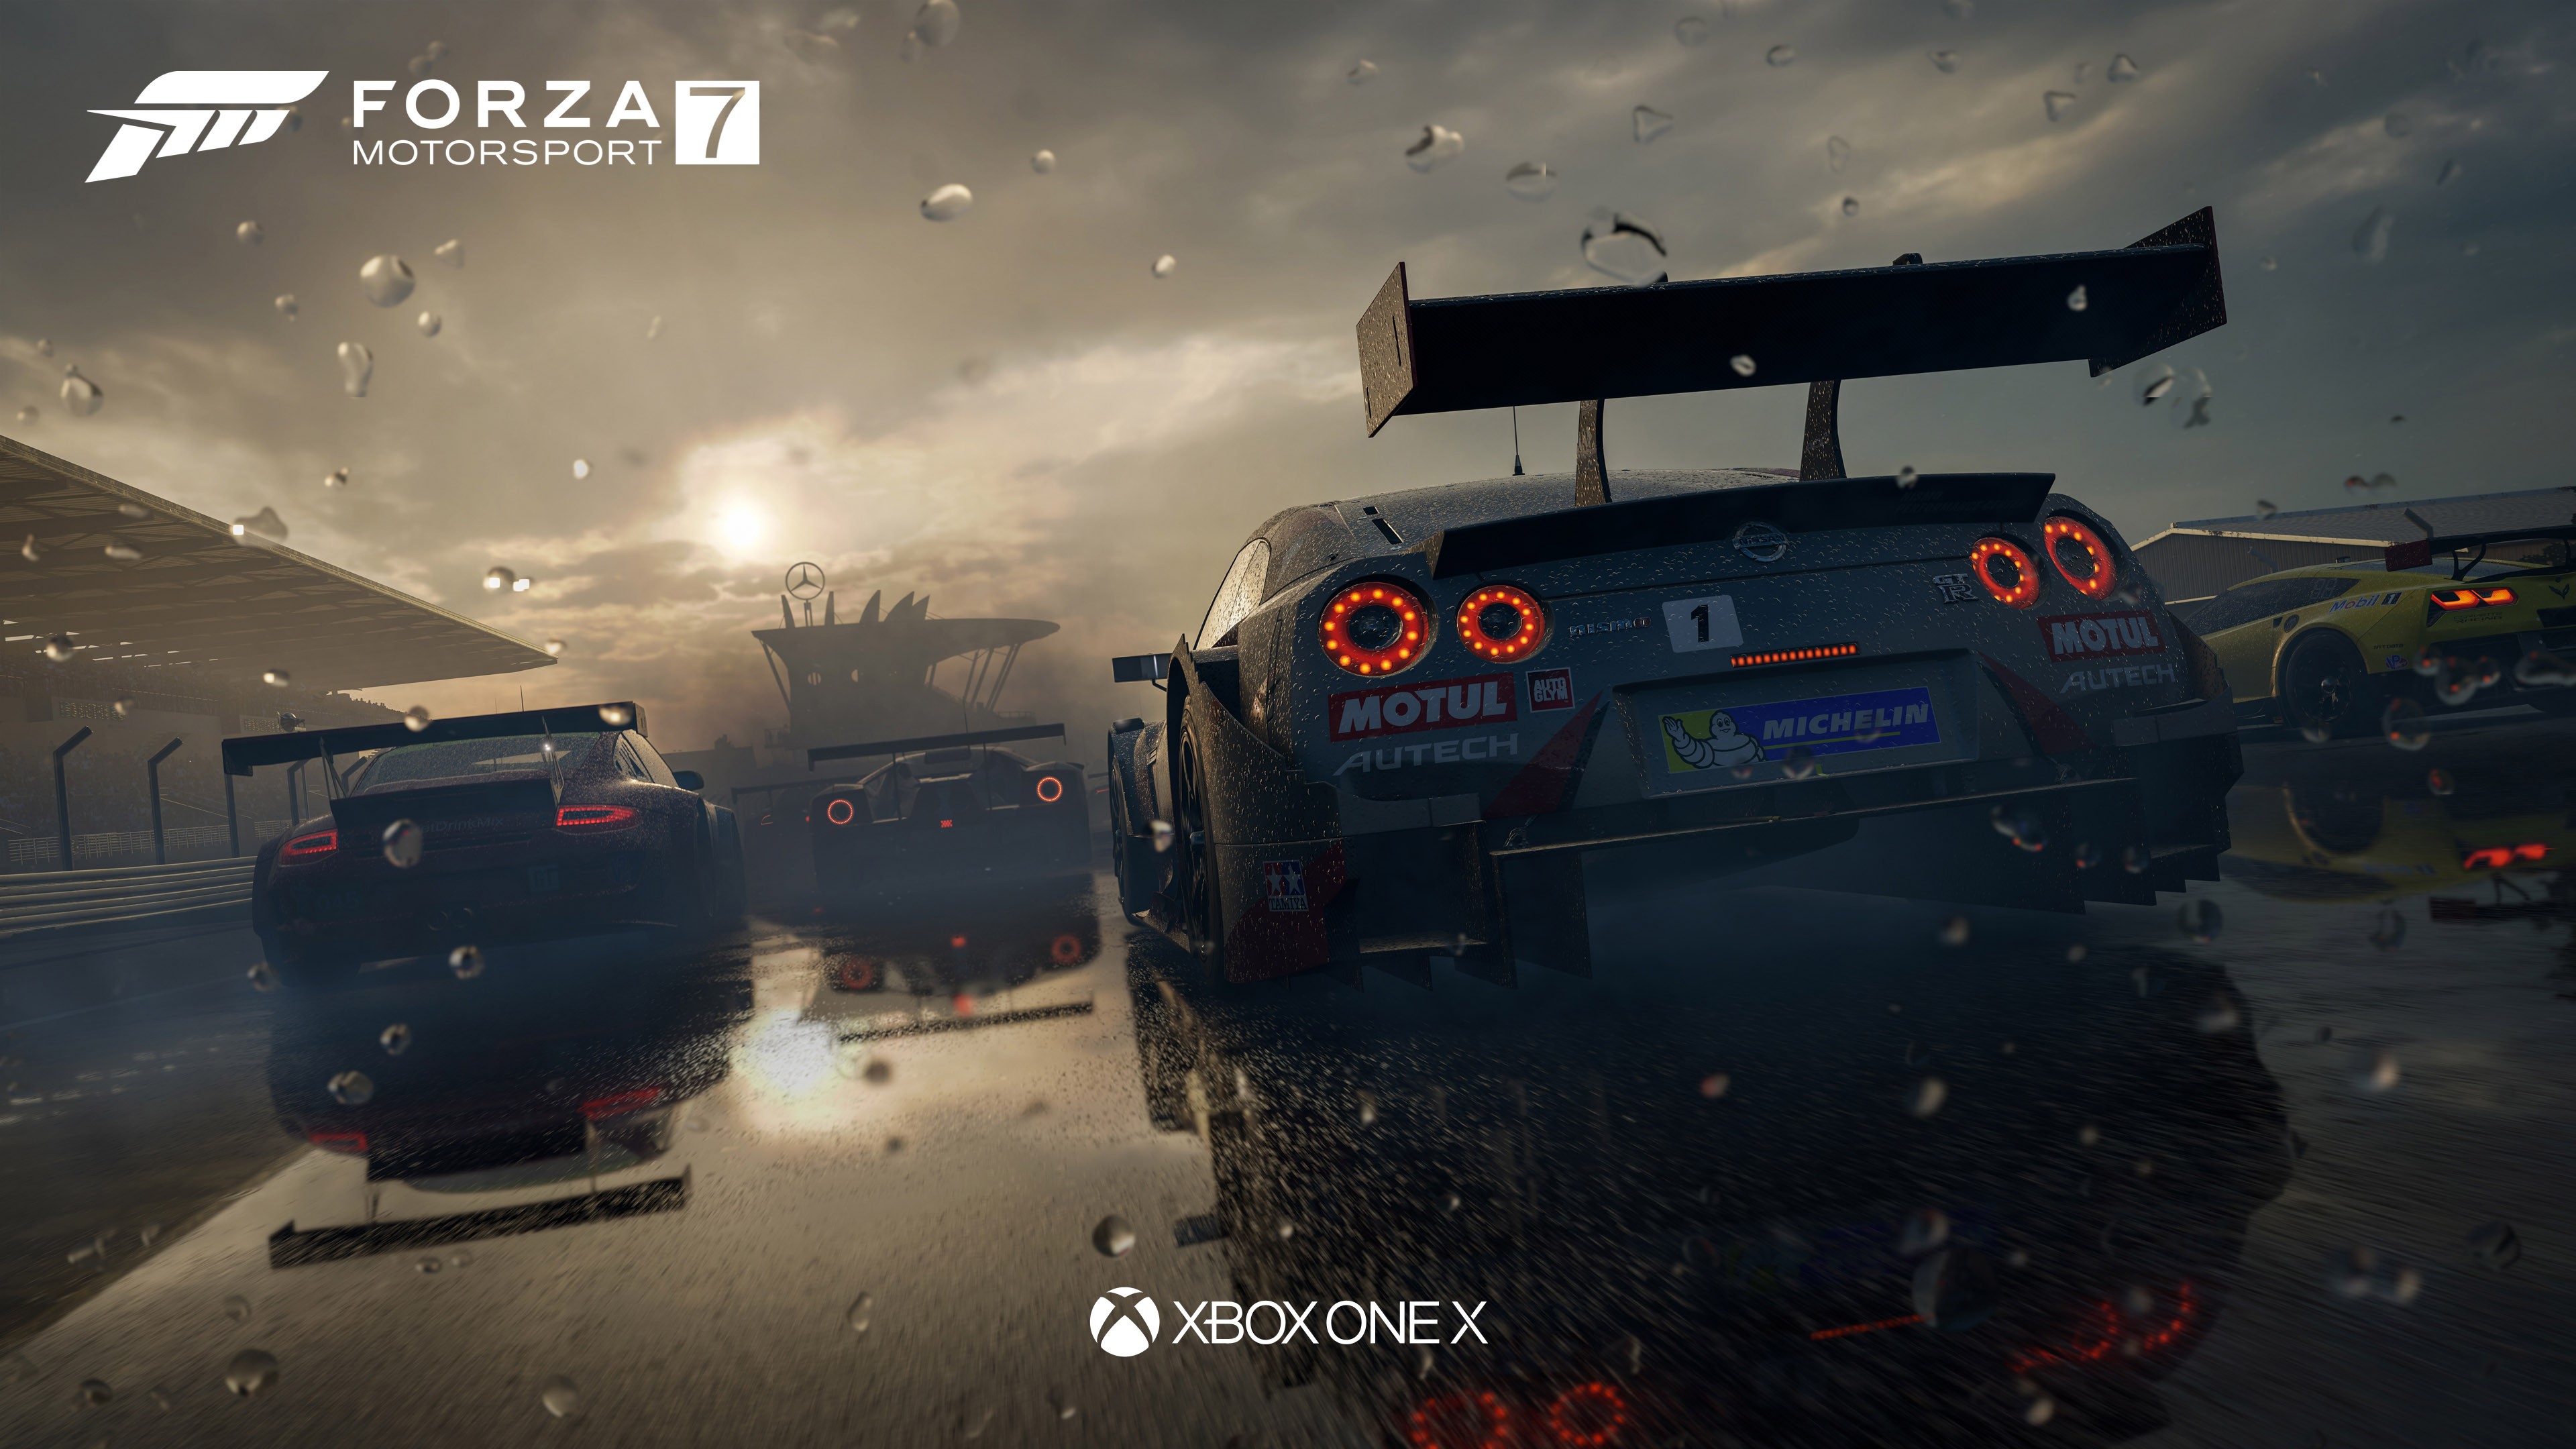 Wallpaper Forza Motorsport 7, 4k, E3 2017, Xbox One X 